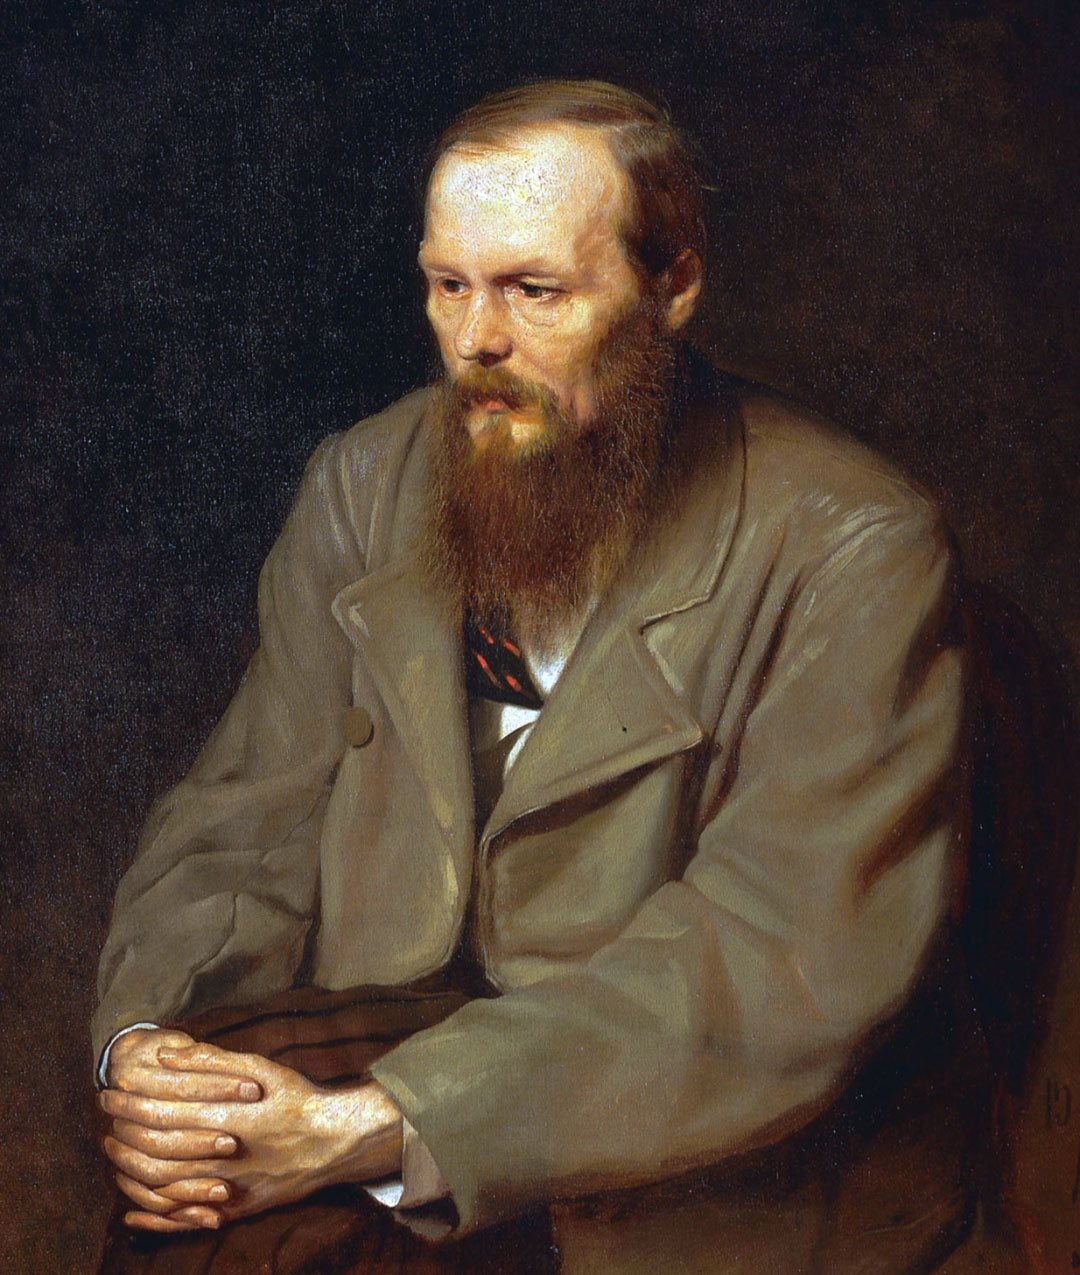  Fyodor Dostoevsky, චරිතාපදානය: ඉතිහාසය, ජීවිතය සහ කෘති